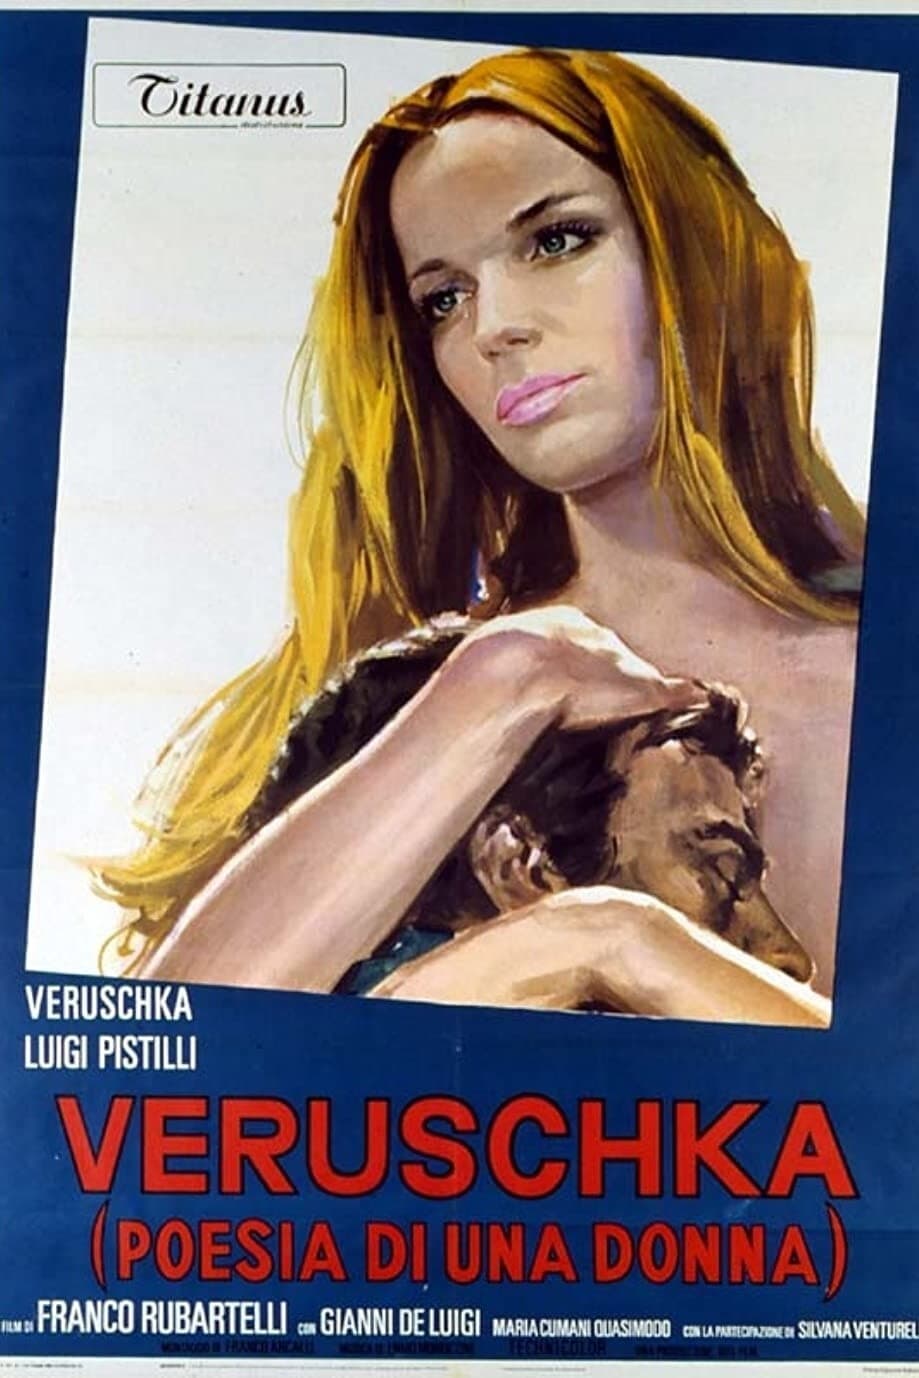 Veruschka - Poetry of a Woman (1971)